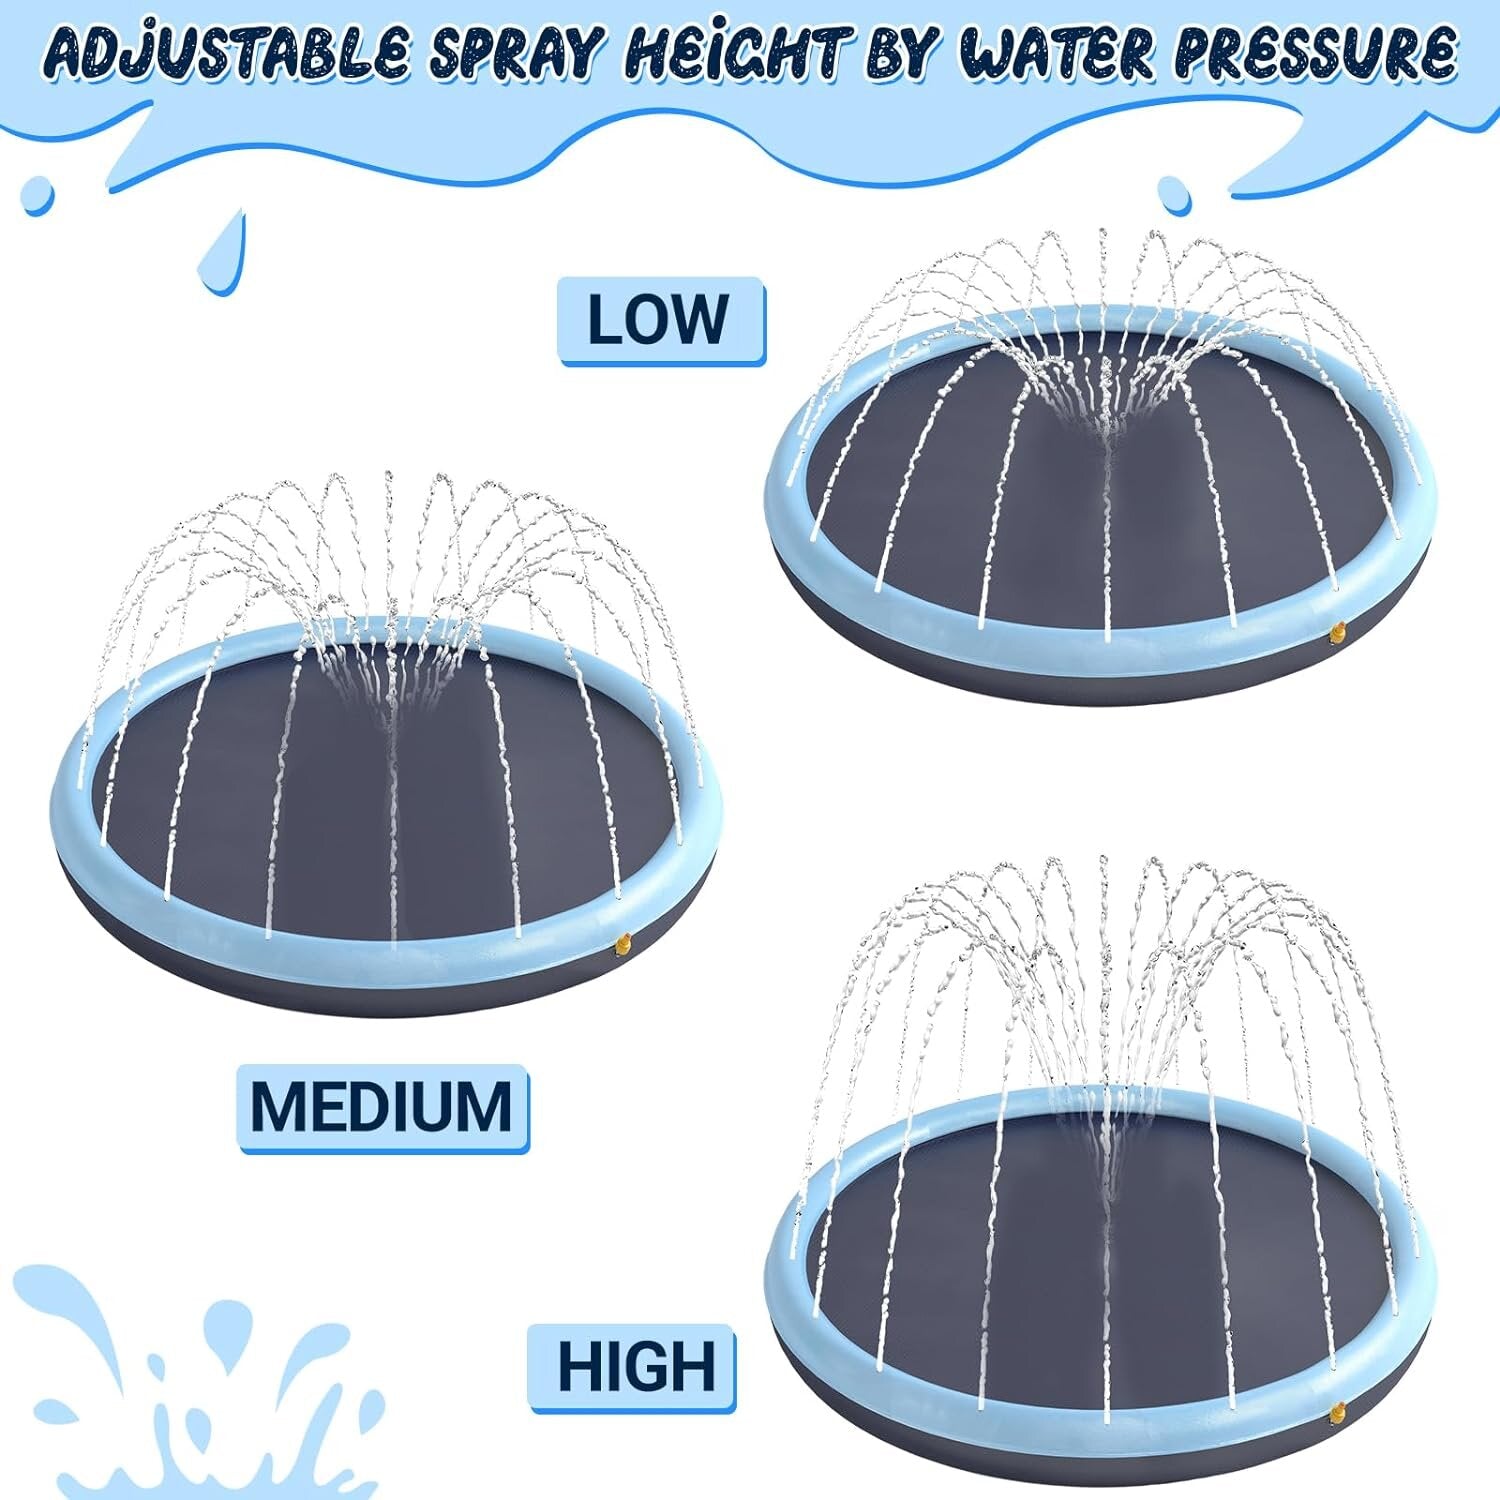 Adjust Spray Height by water pressure